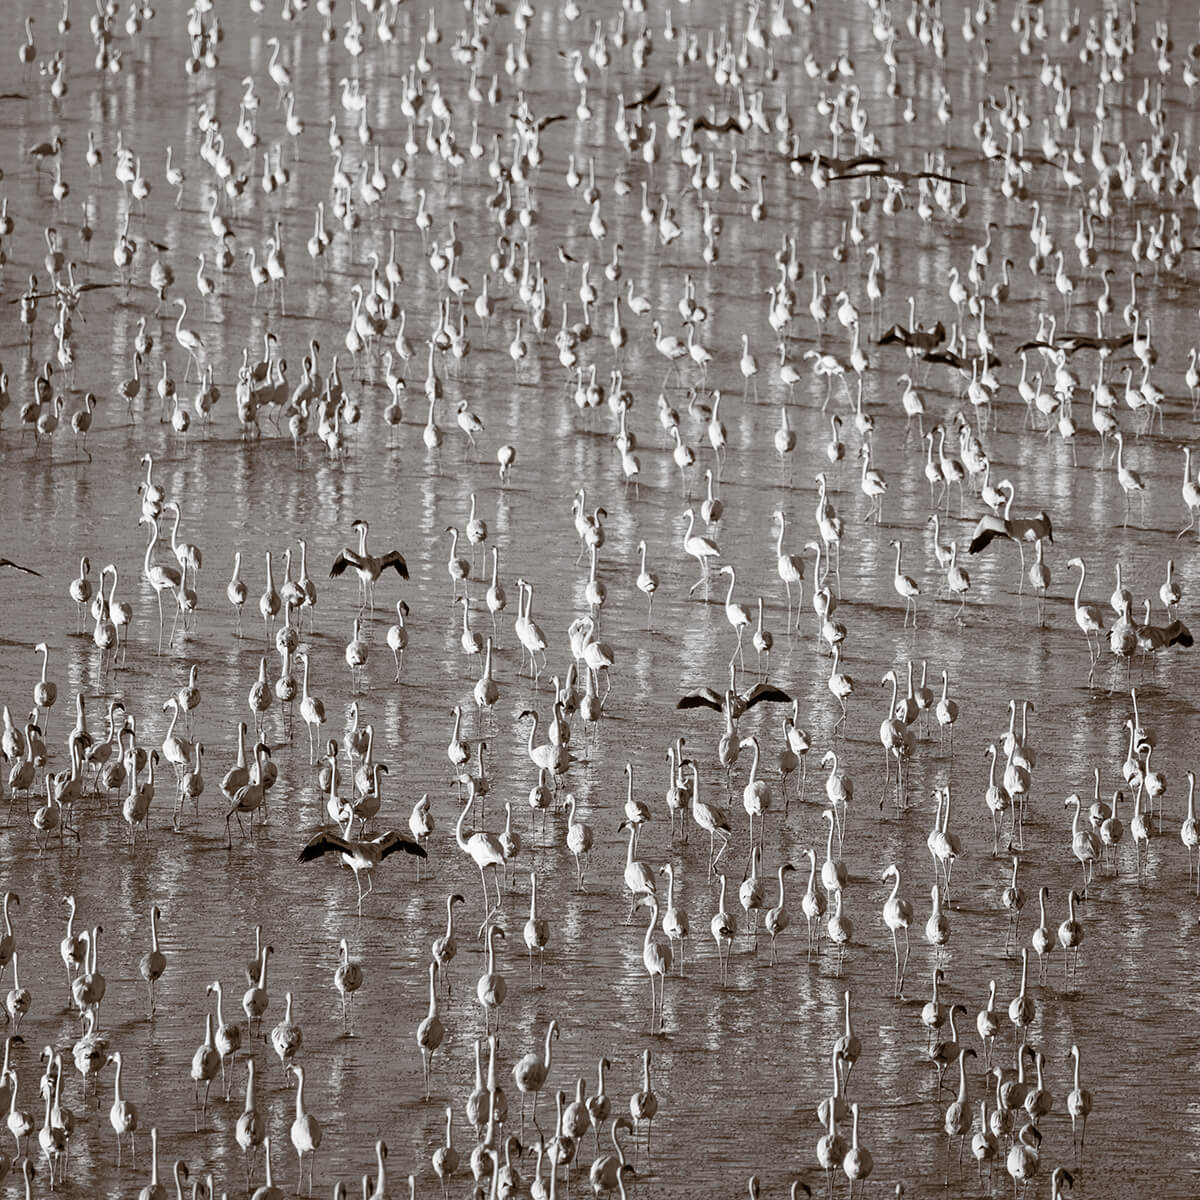 A flock of flamingos in Tanzania